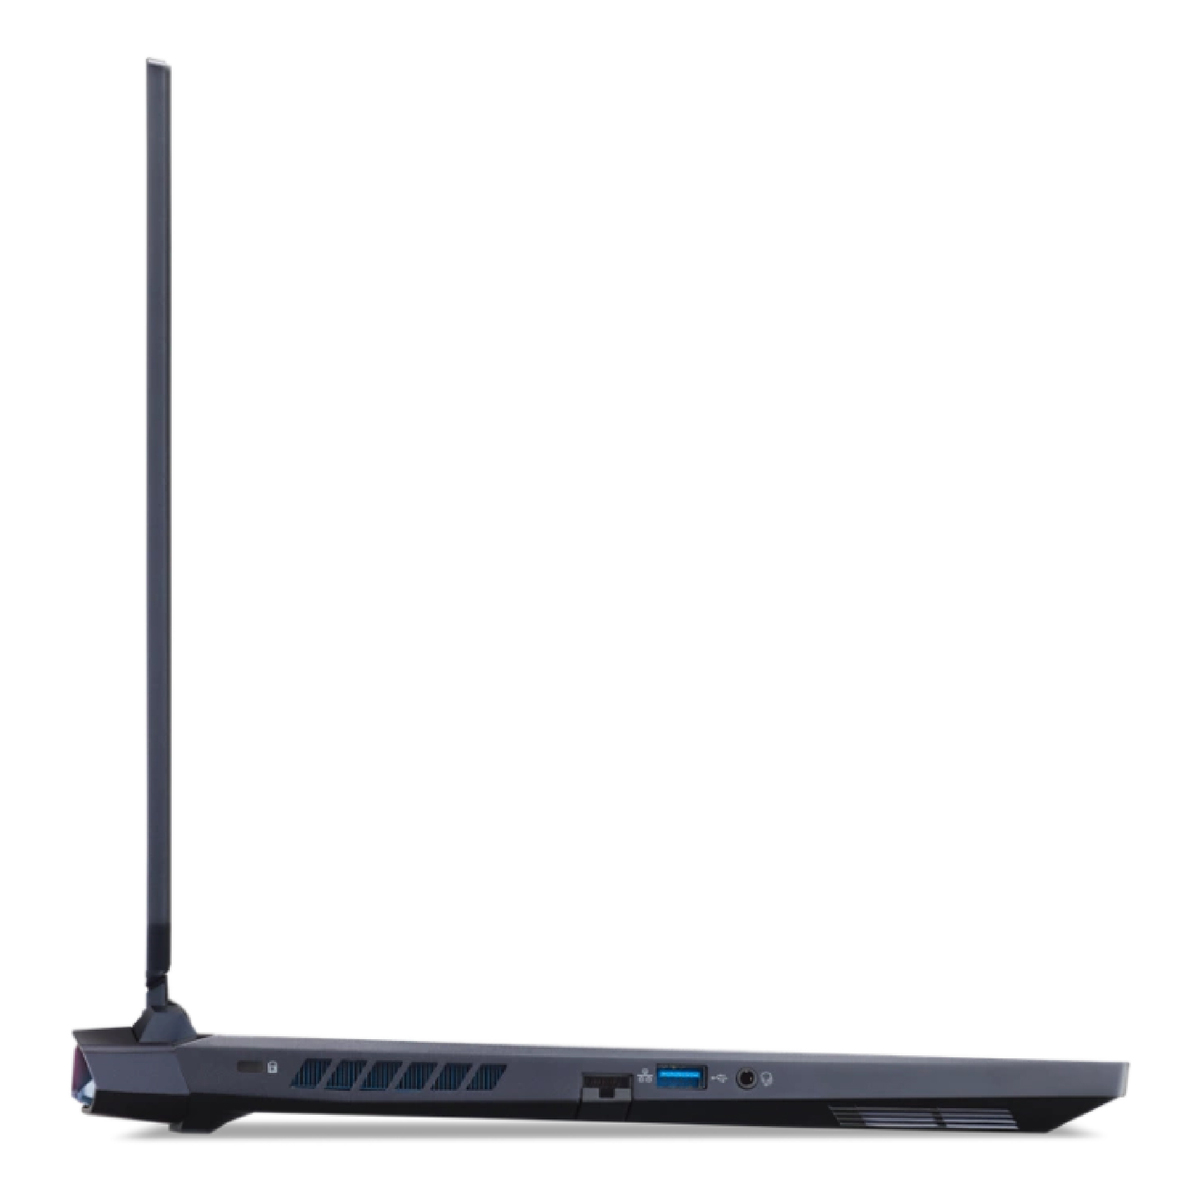 Acer Predator Helios 300 PH315-55-73Q1 Gaming Notebook, 15.6" LCD 165 Hz QHD Display, Intel Core i7-12700H, 32GB RAM, 1TB SSD, GeForce RTX 3080 8GB, RGB Backlight KB, Windows 11, Black